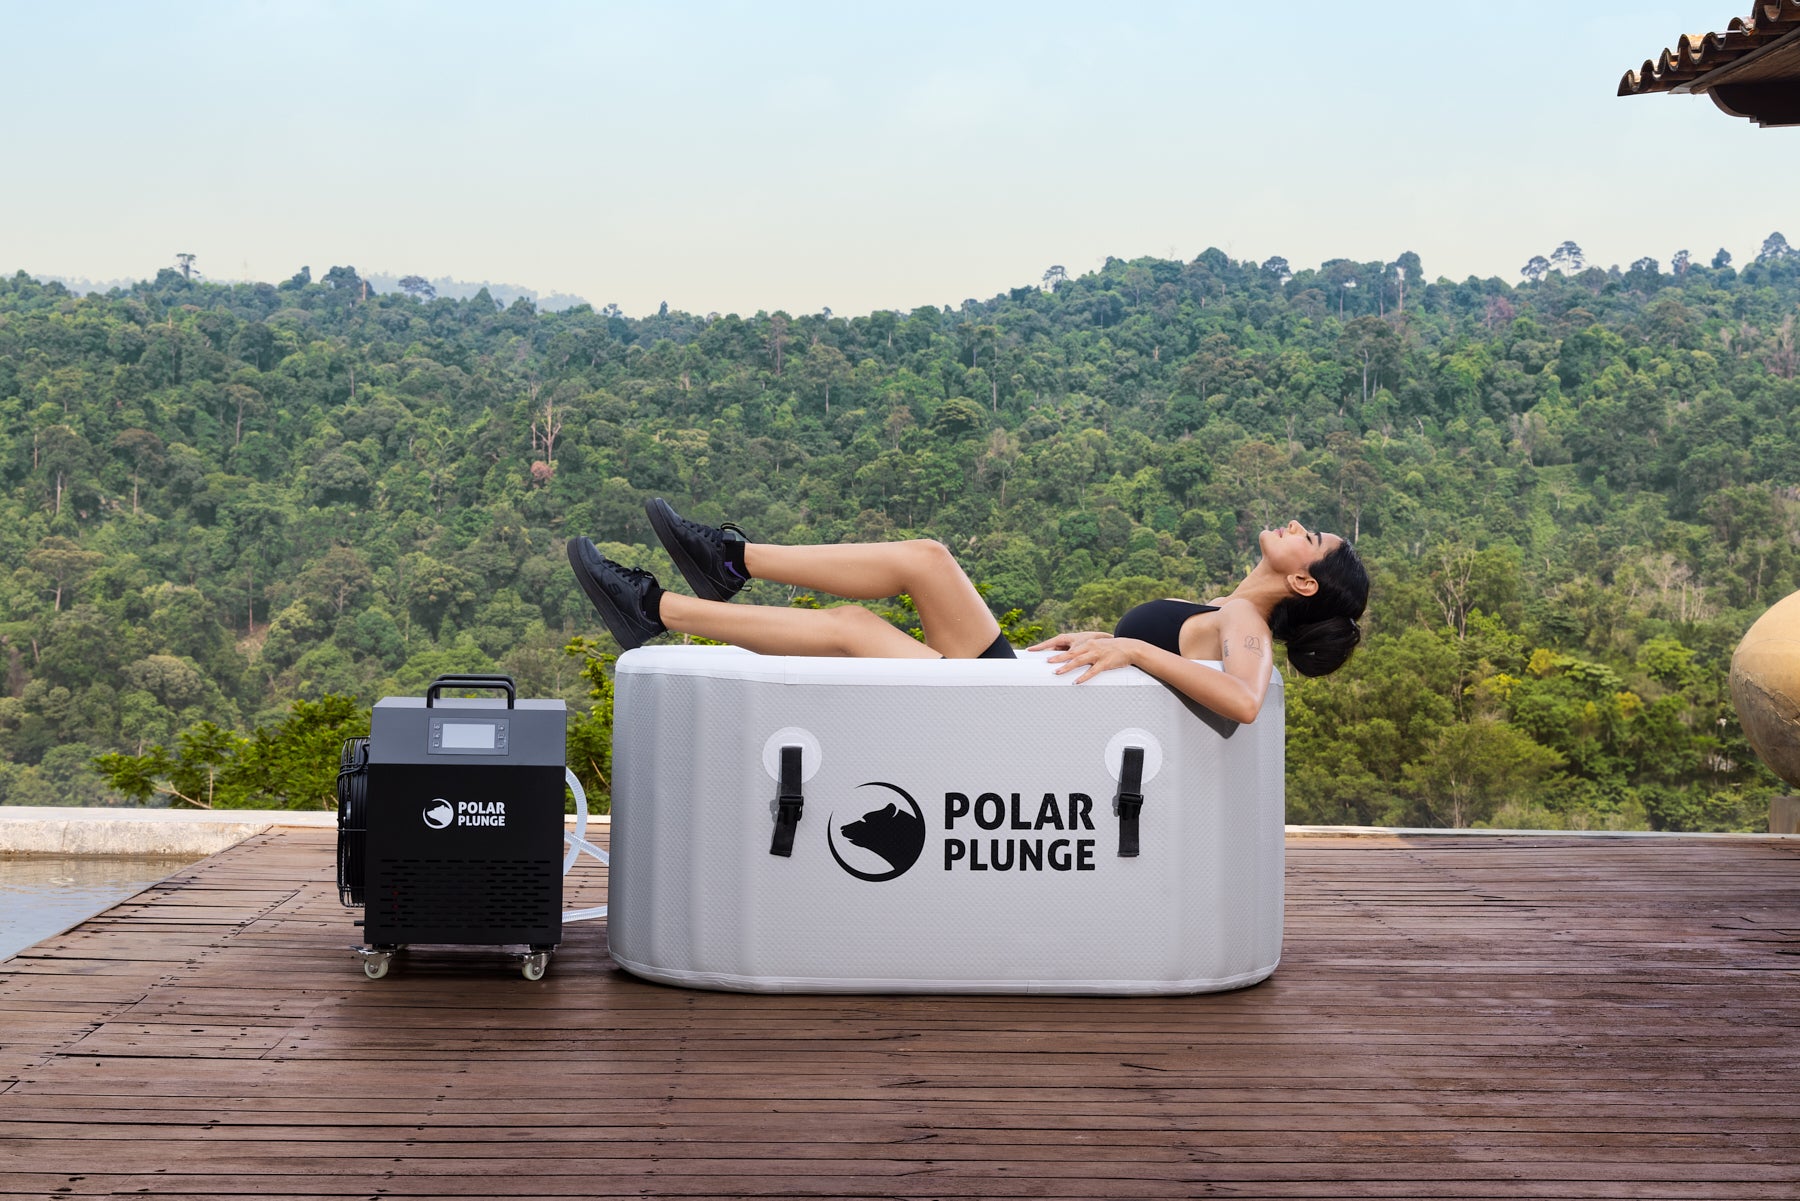 polarplunge sub-zero v2 with hot model cold plunge ice bath Malaysia